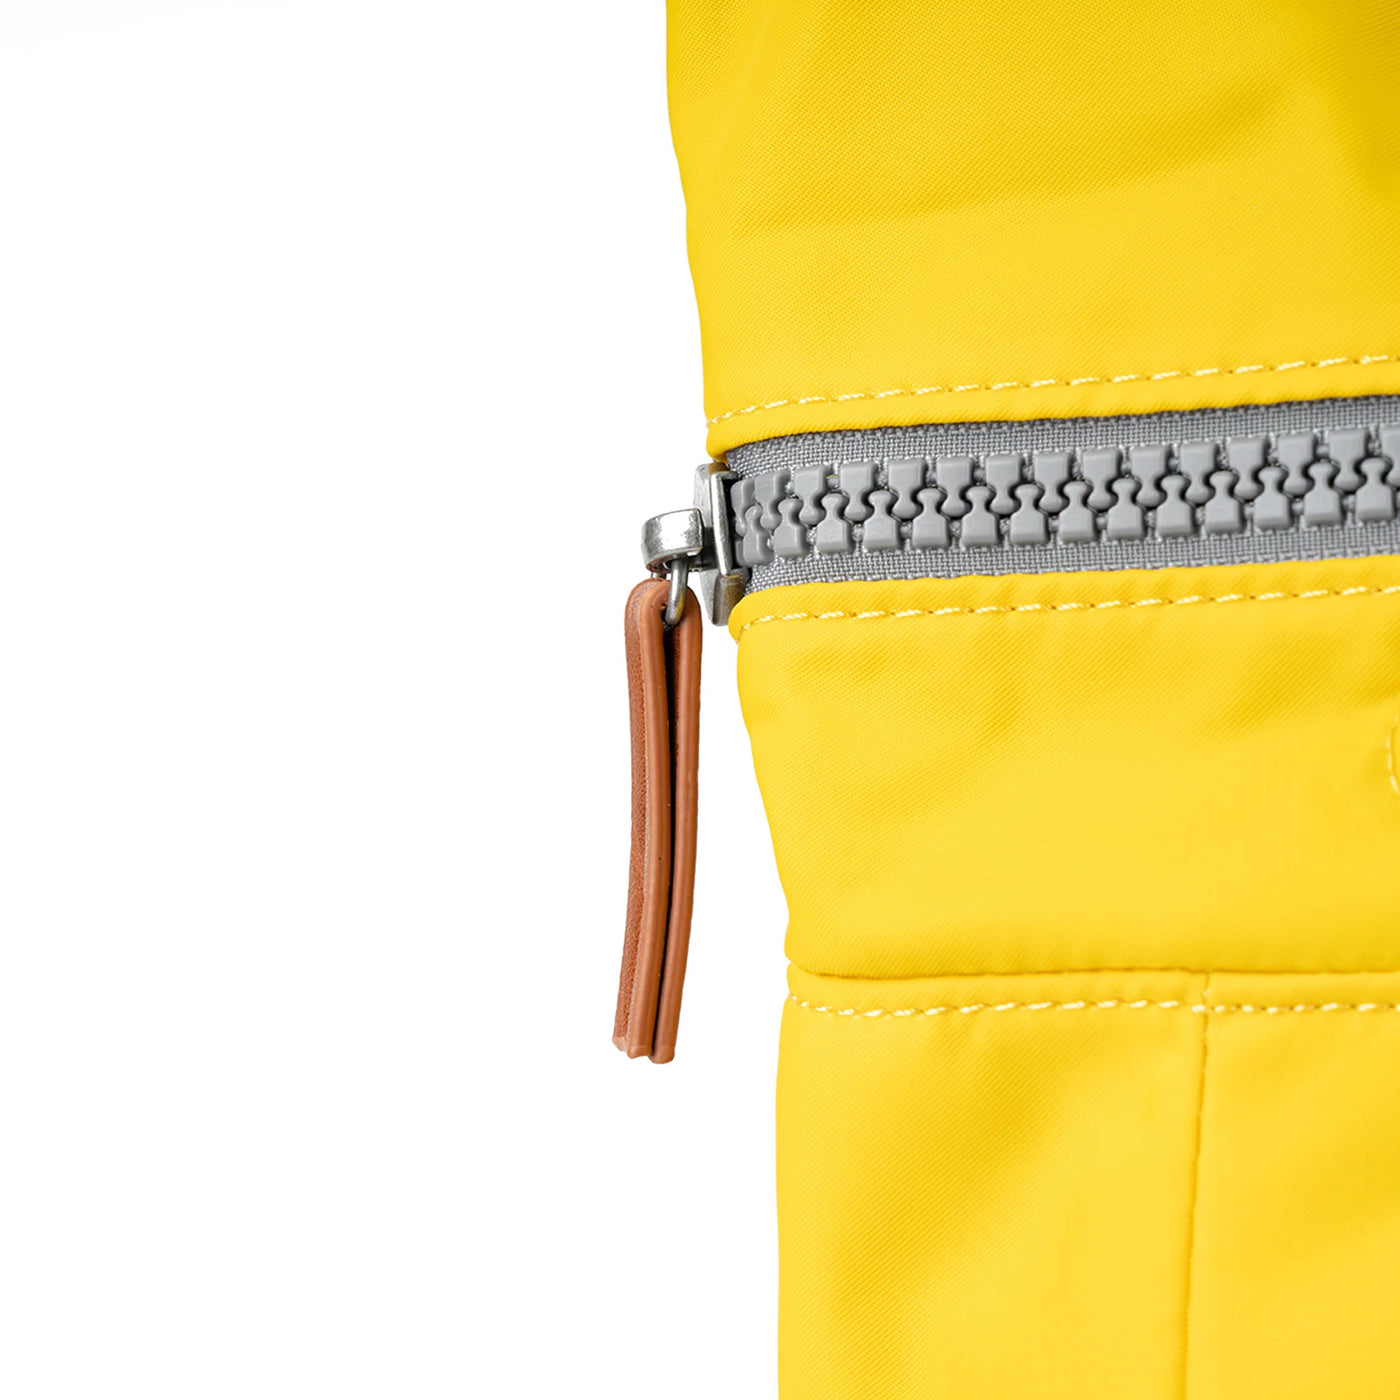 Roka Canfield B Backpack-Recycled Nylon - SMALL - Mustard Yellow